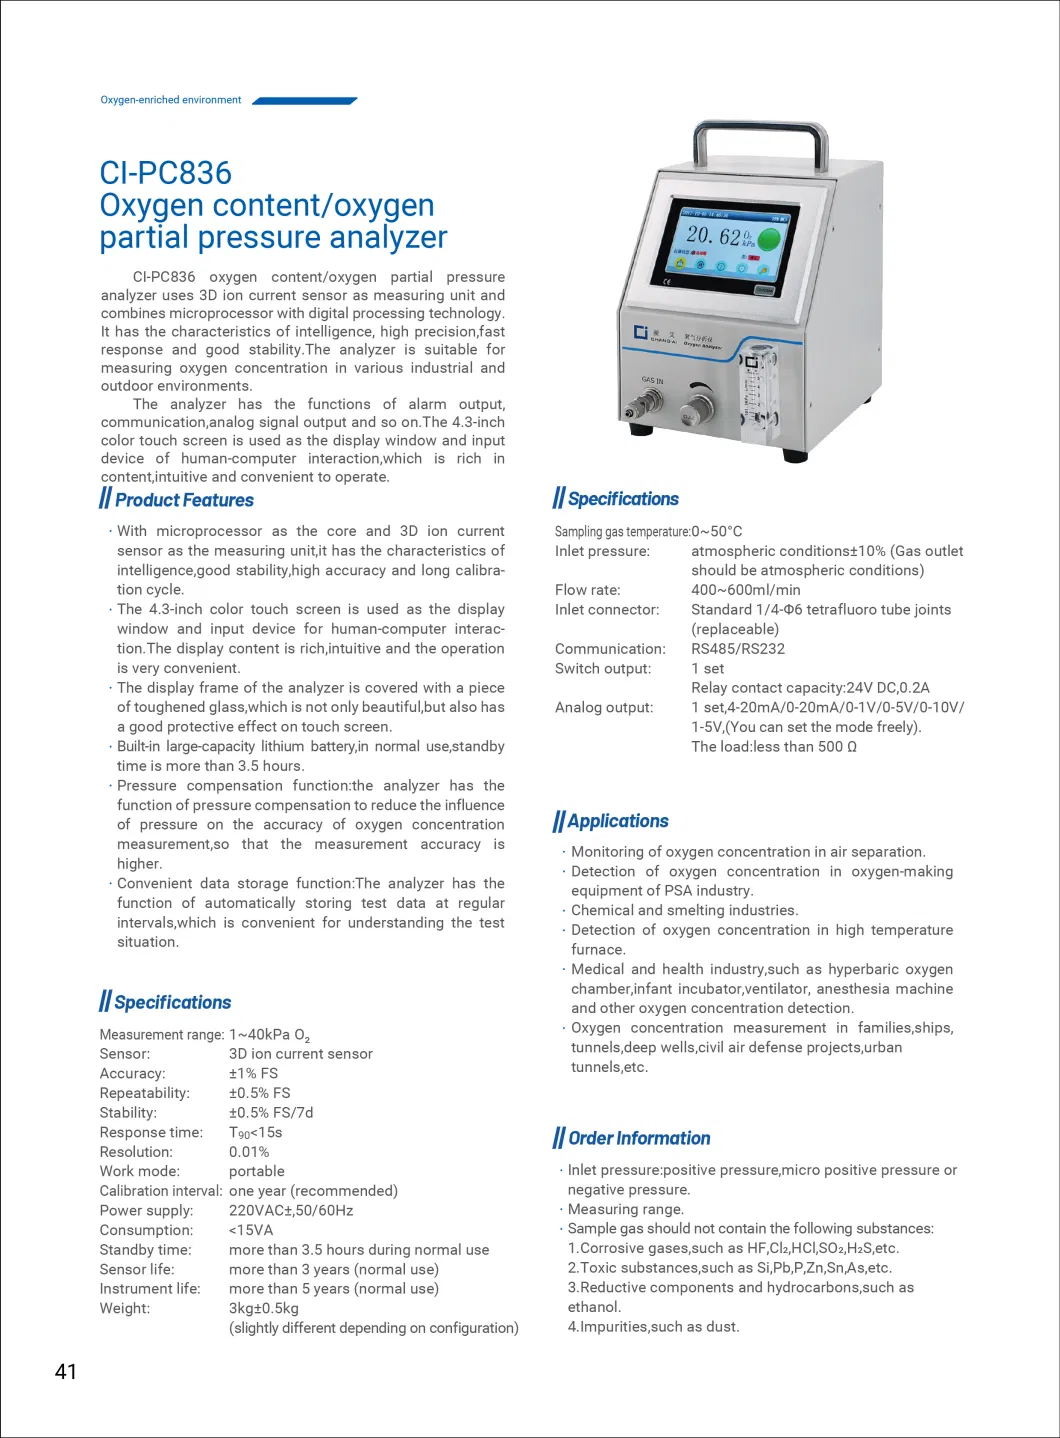 Ci-PC836 Oxygen Content/Oxygen Partial Pressure Analyzer